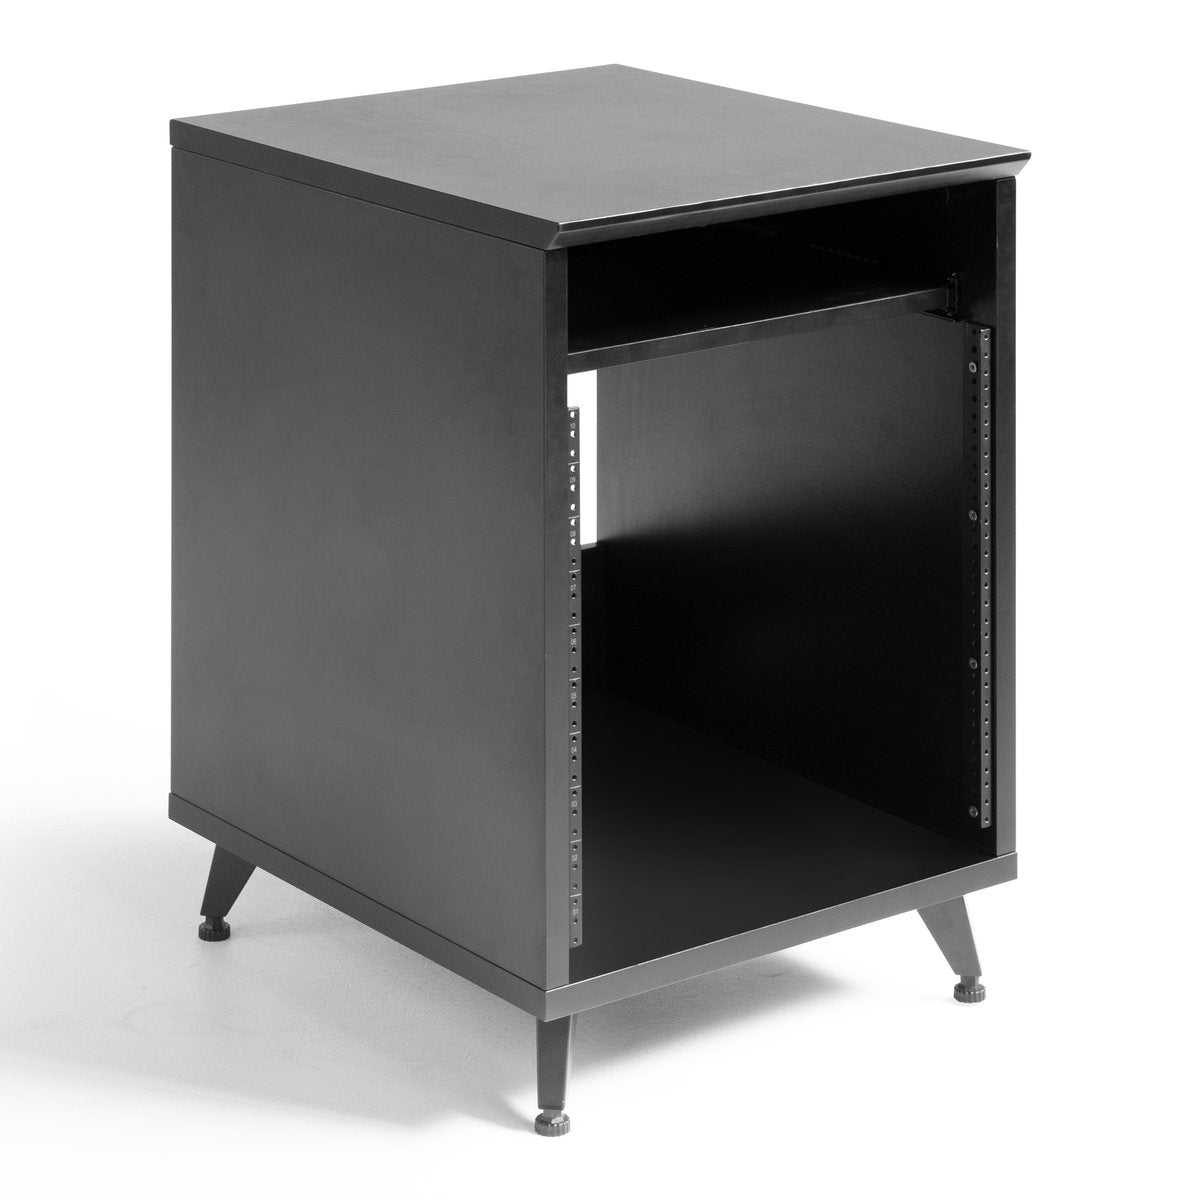 Gator Frameworks Elite Series Furniture Desk 10U Rack - Black, View 3